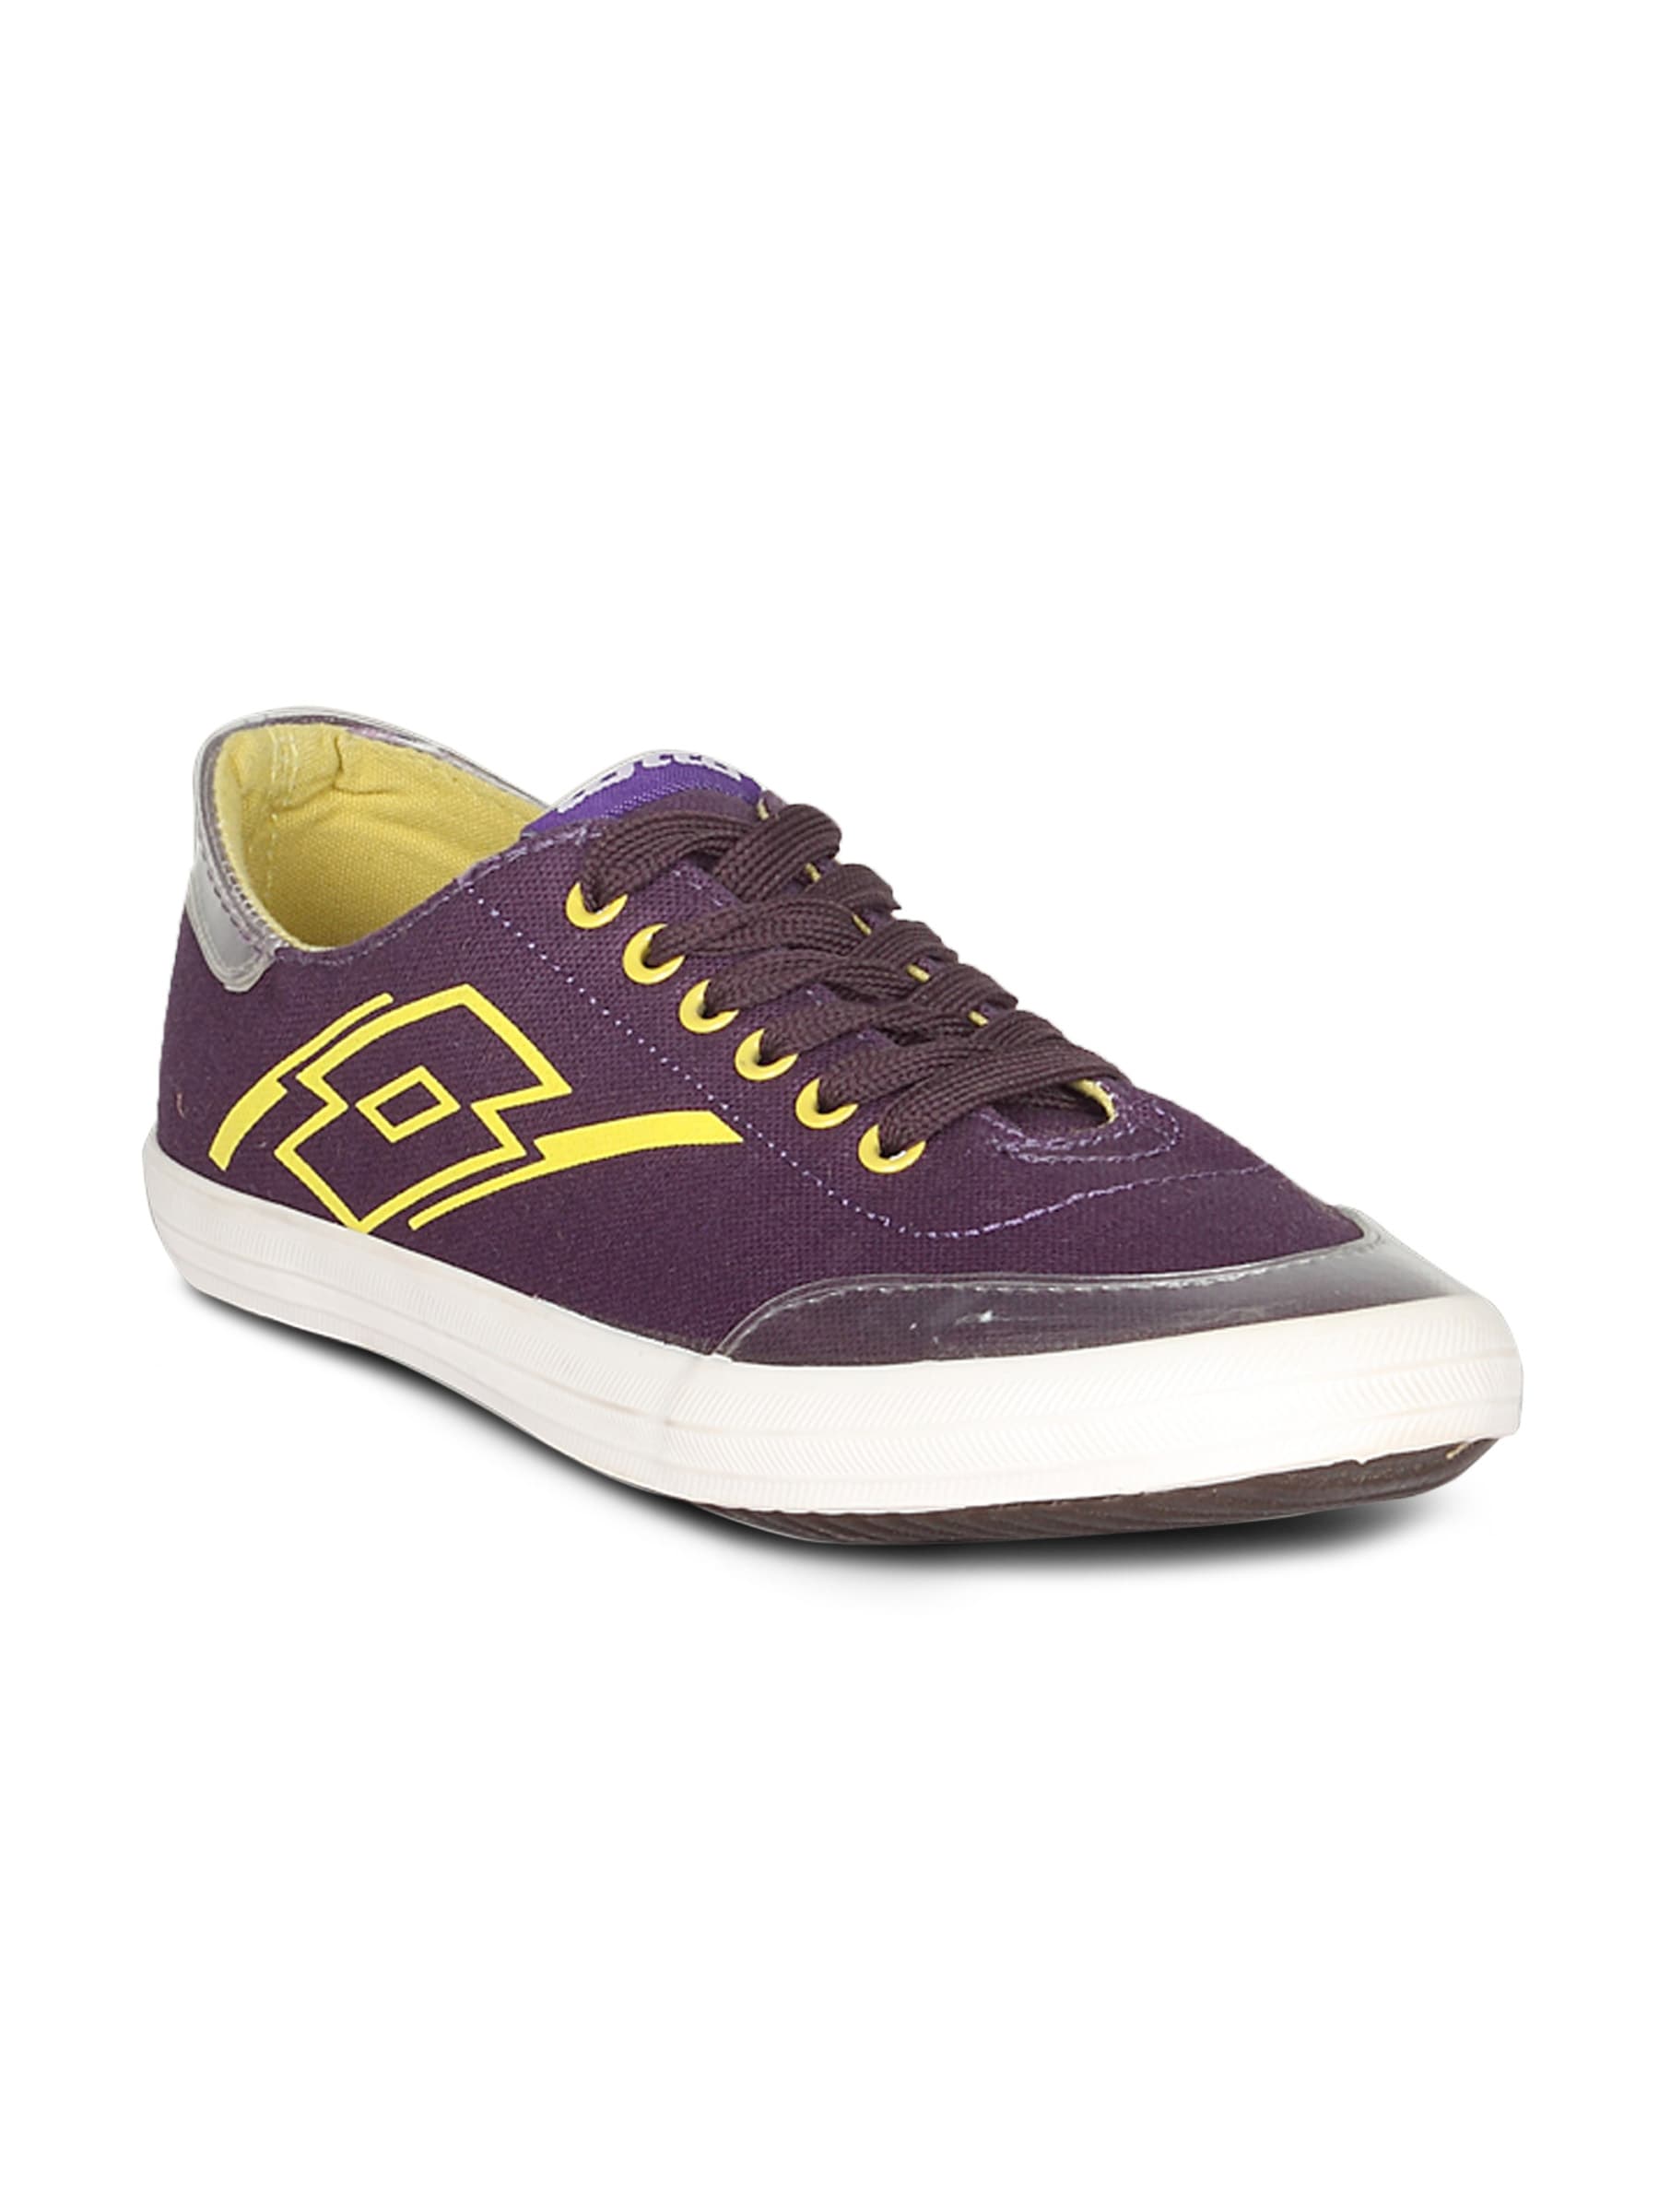 Lotto Unisex Canvas Purple Yellow Shoe